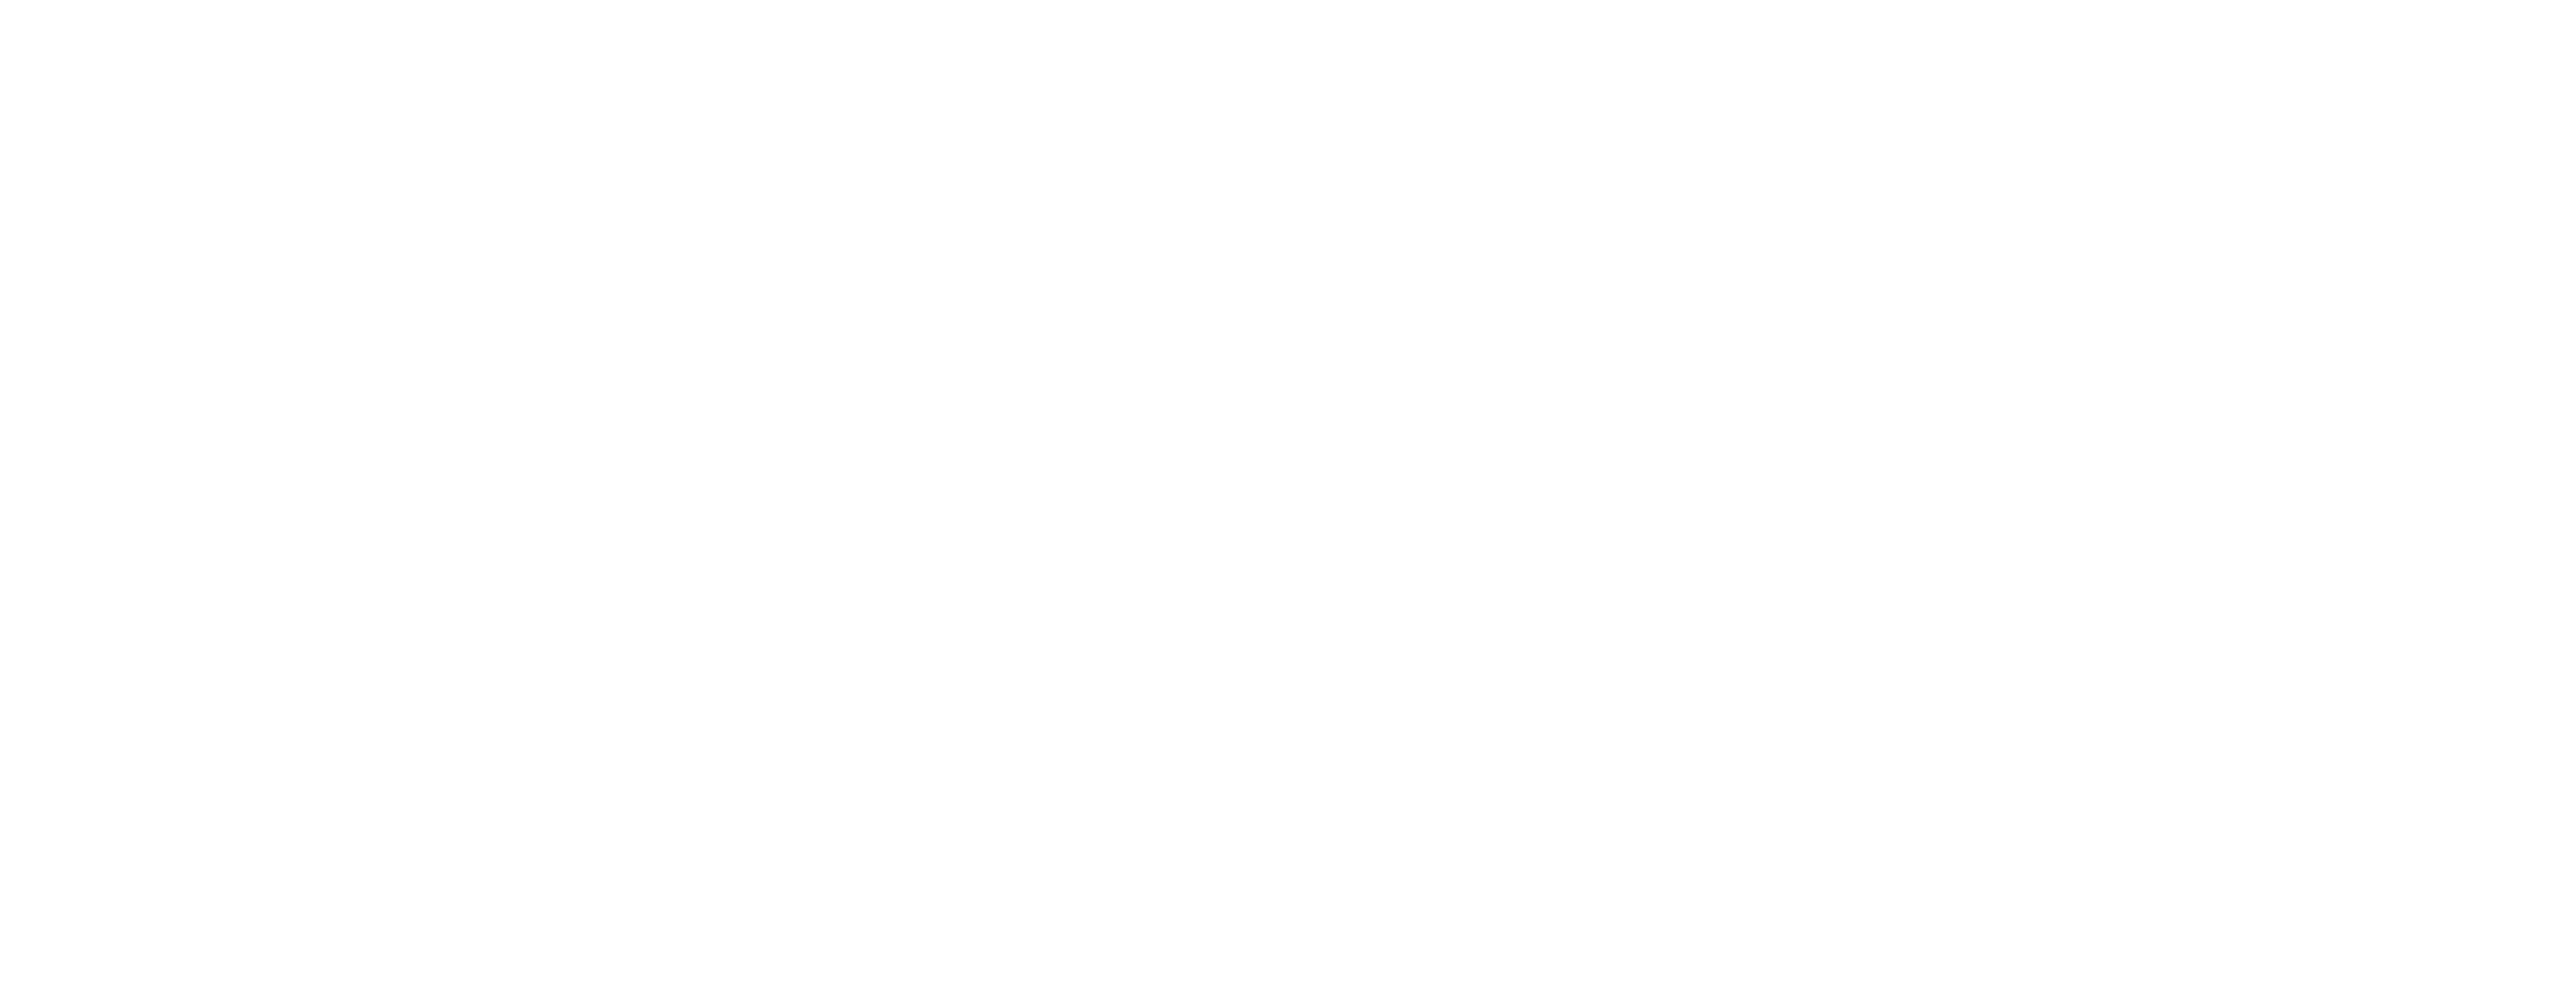 Jerry's Jungle Logo